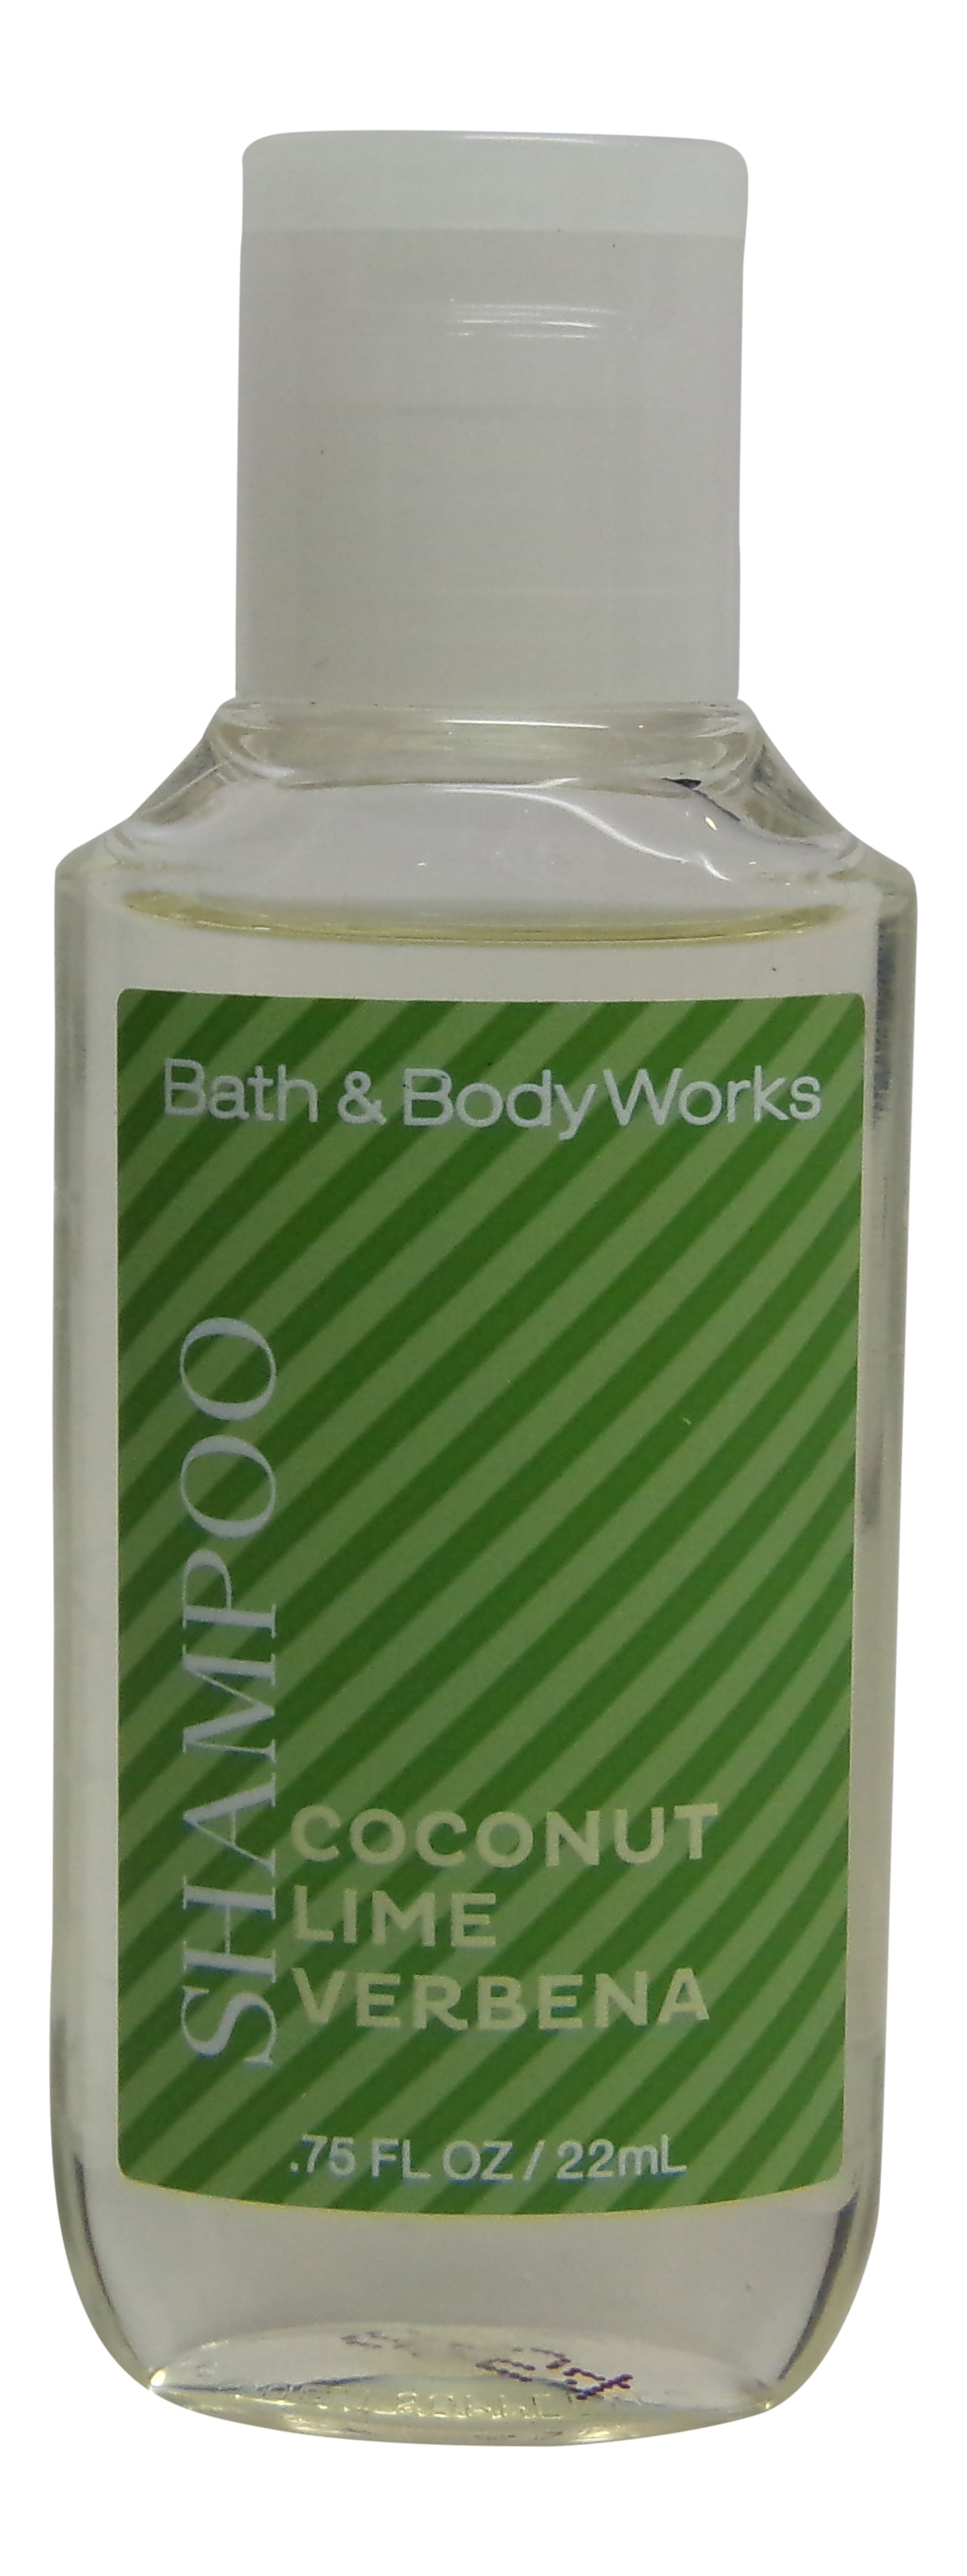 Bath & Body Works Coconut Lime Verbena Shampoo Lot of 10. Total of 7.5oz